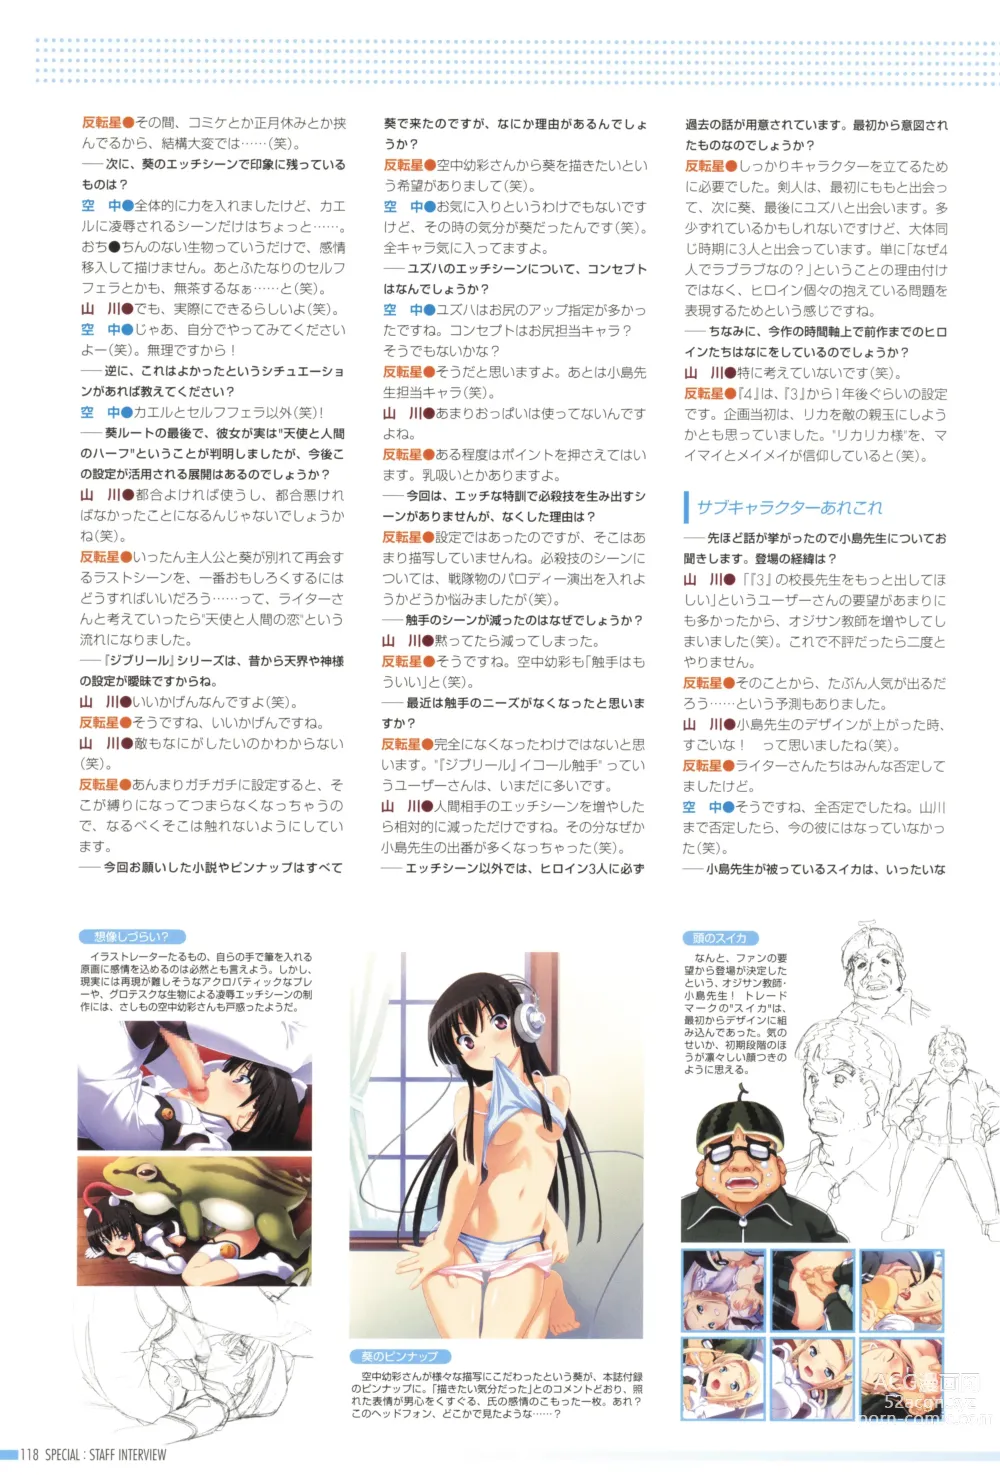 Page 122 of manga Makai Tenshi Djibril 4 Official Fanbook